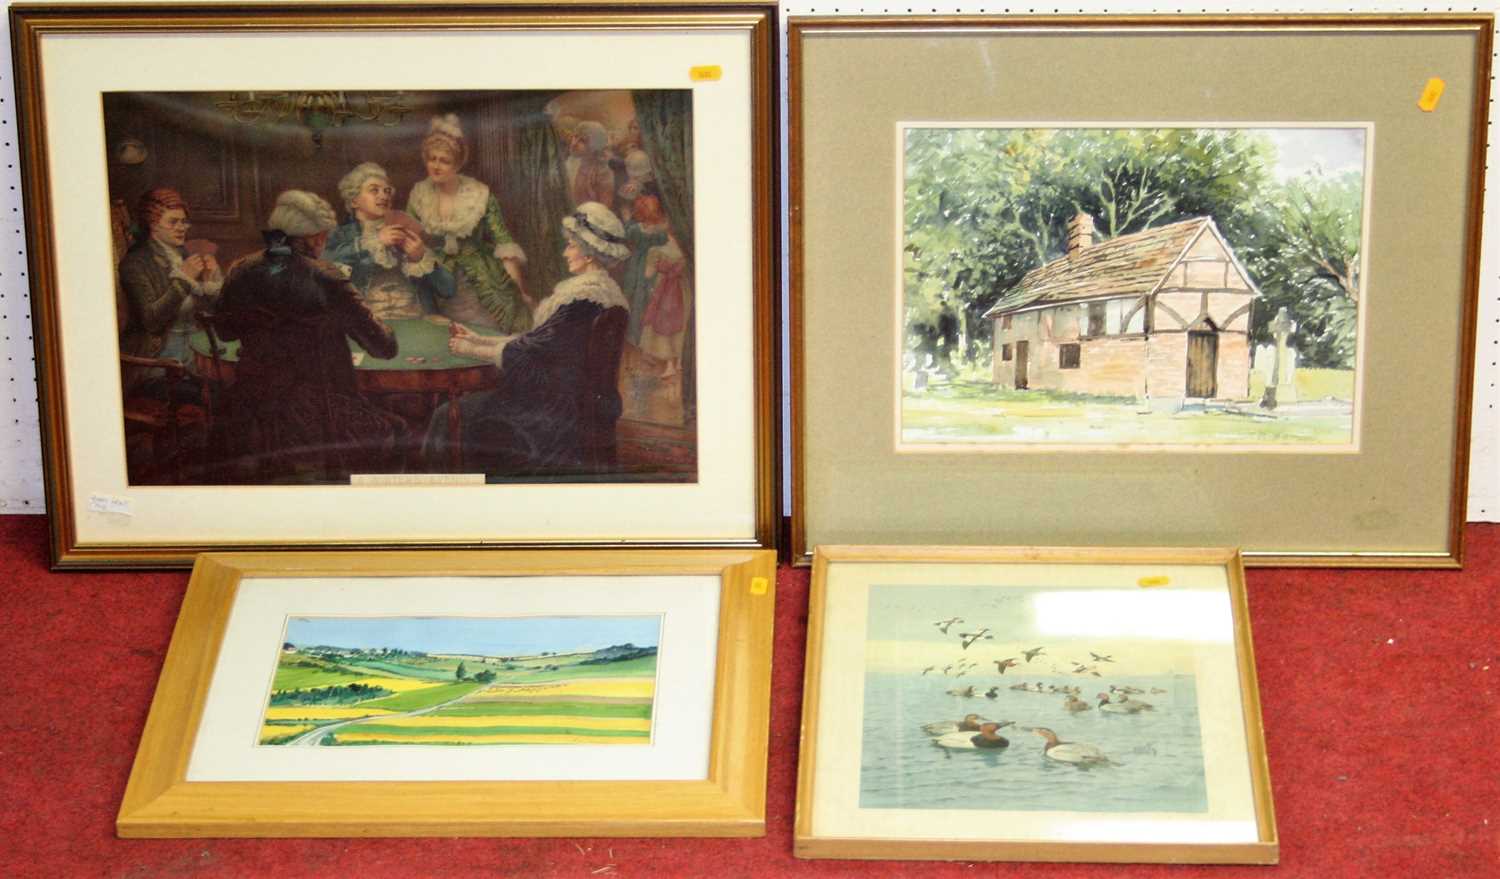 Paul Mann - Priest House, watercolour, framed Pears print, F Slater - French landscape, watercolour,